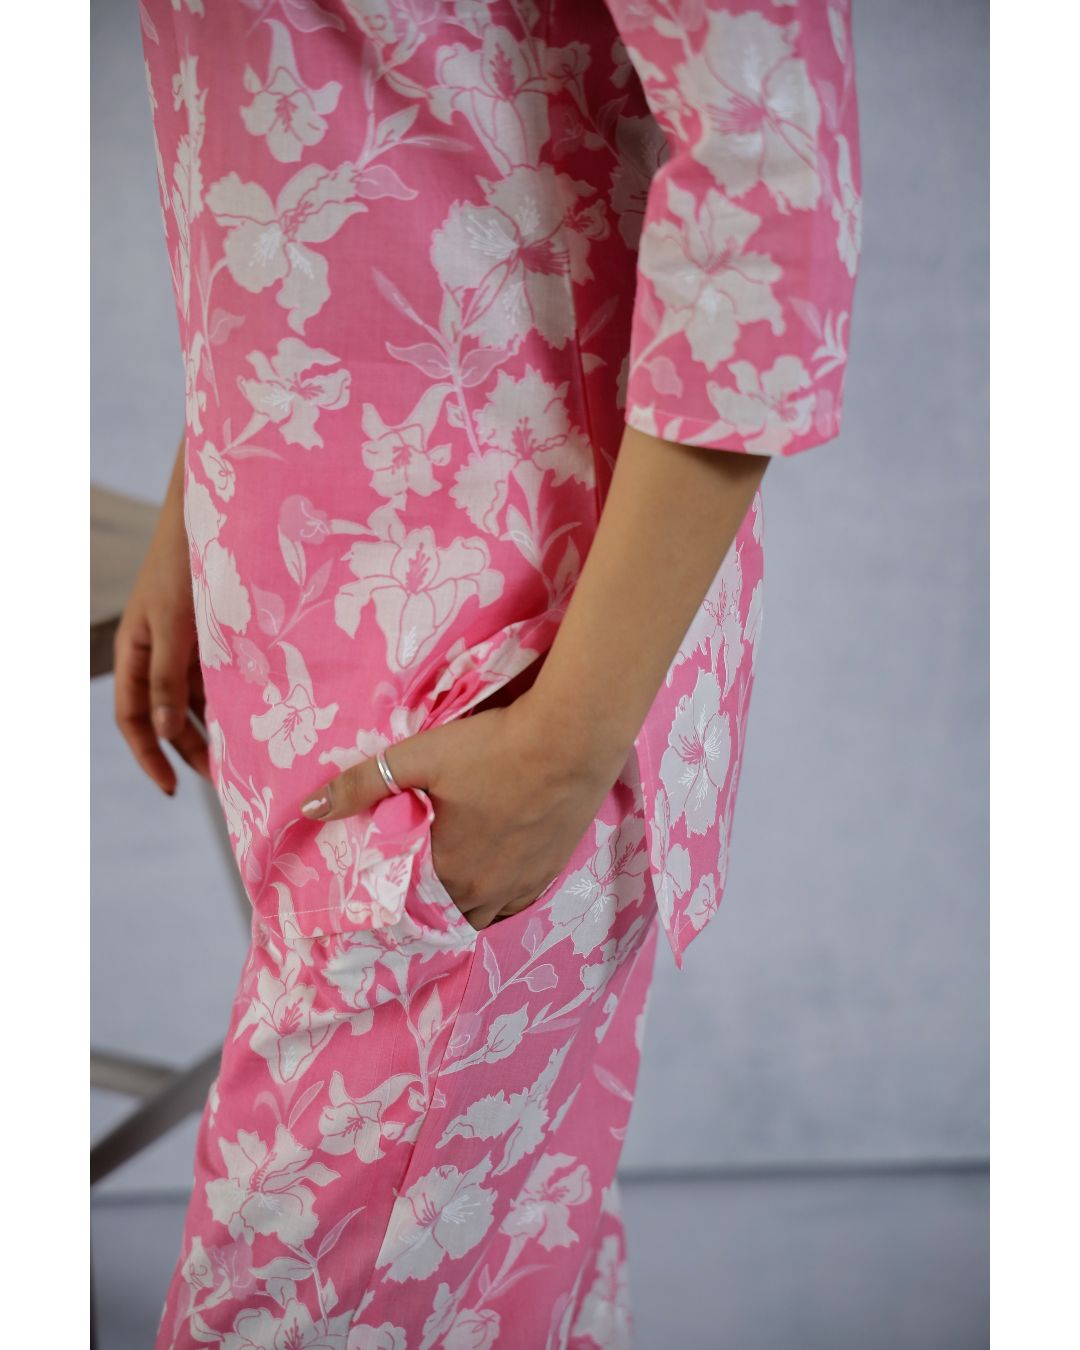 Plus size Pink Floral Printed Cotton Loungewear set